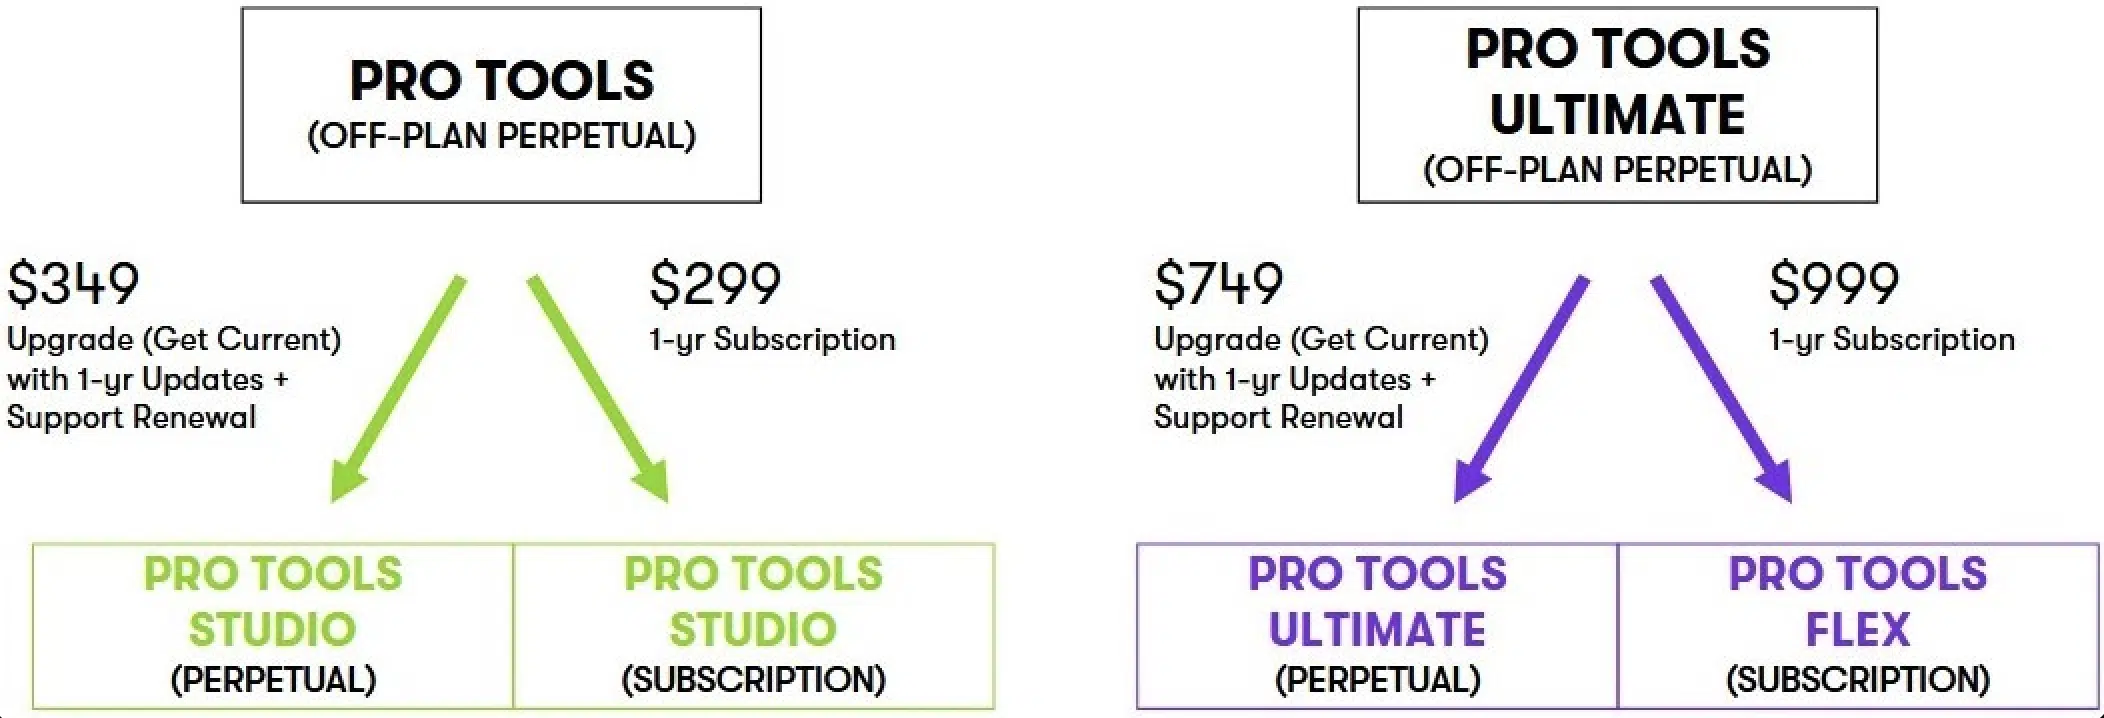 Pro Tools Pricing2 - Unison